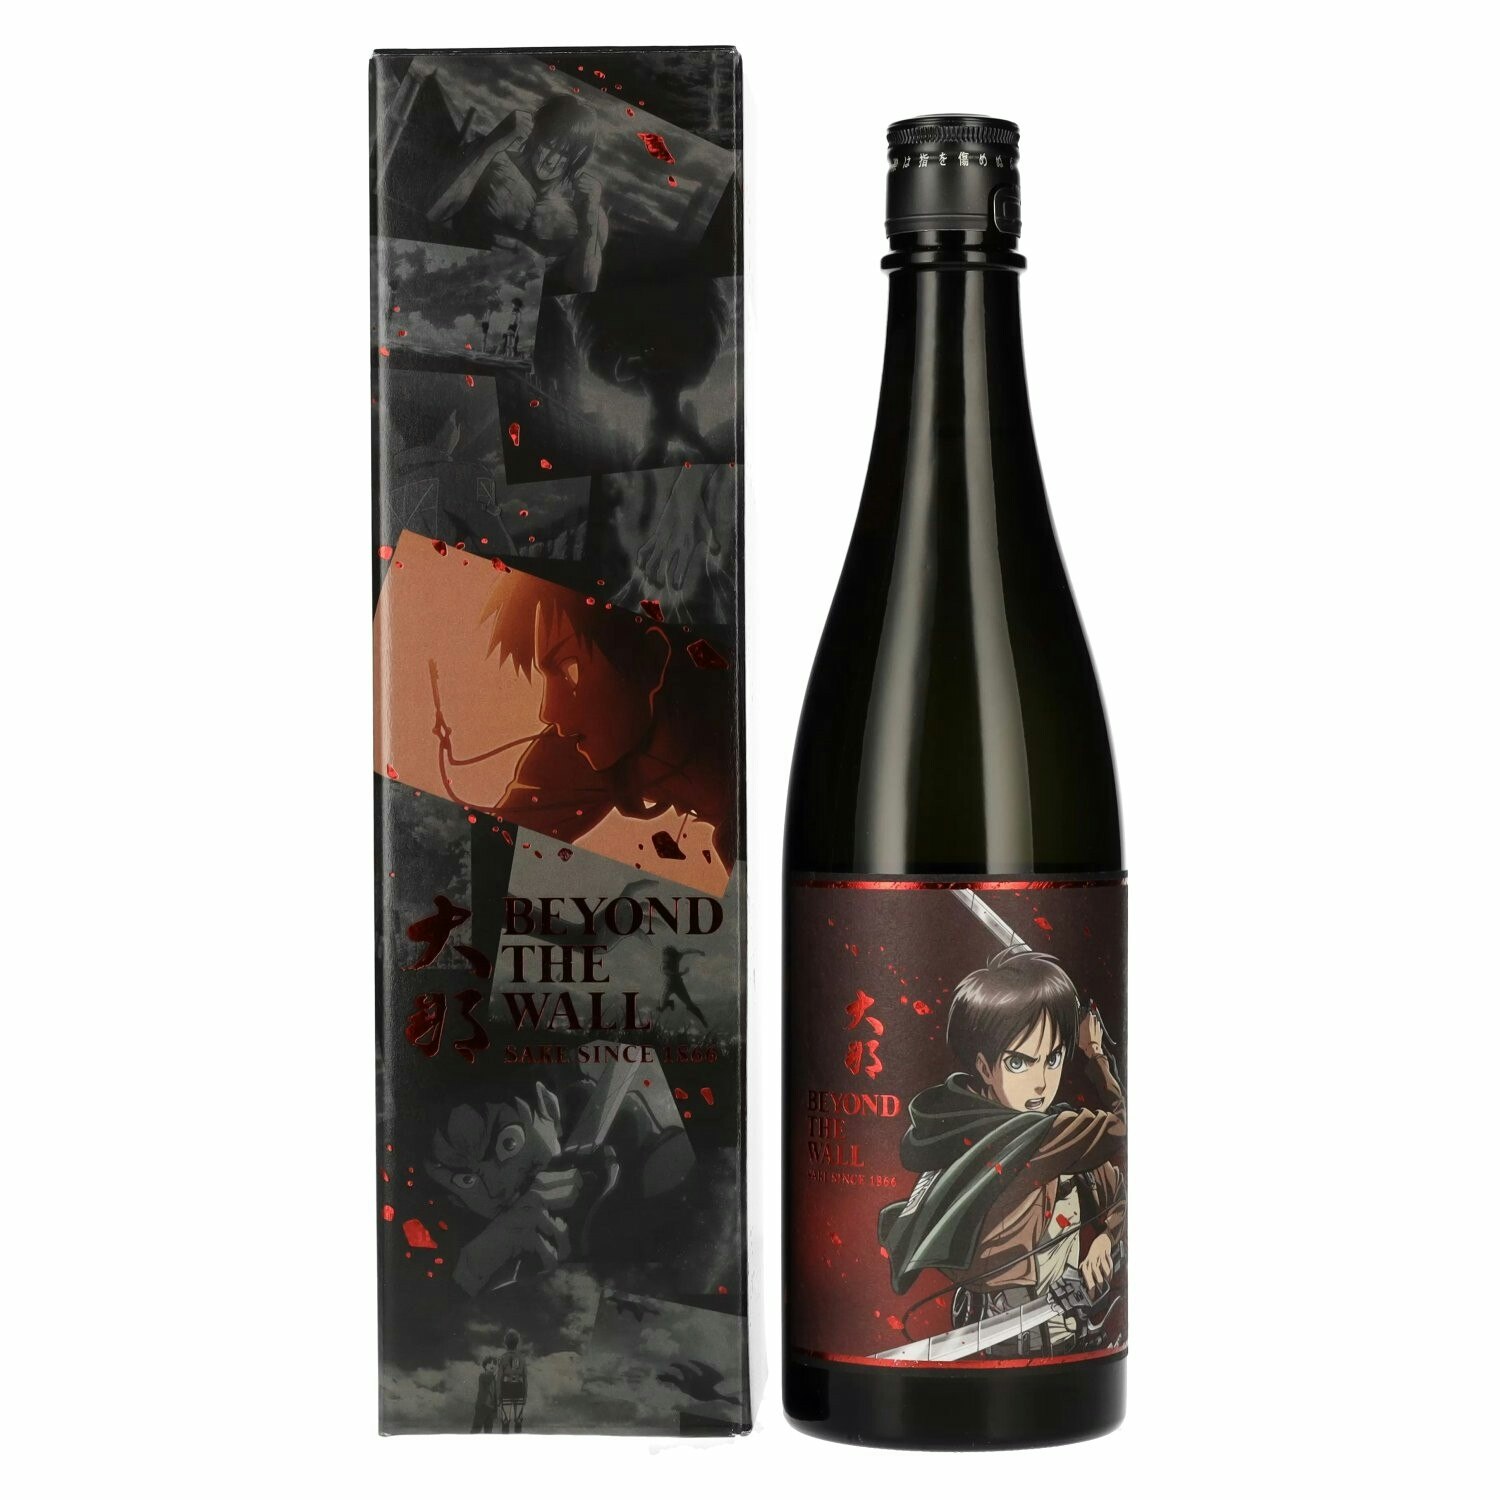 Attack on Titan x Beyond the Wall EREN Model Japanese Sake 15% Vol. 0,72l in Giftbox